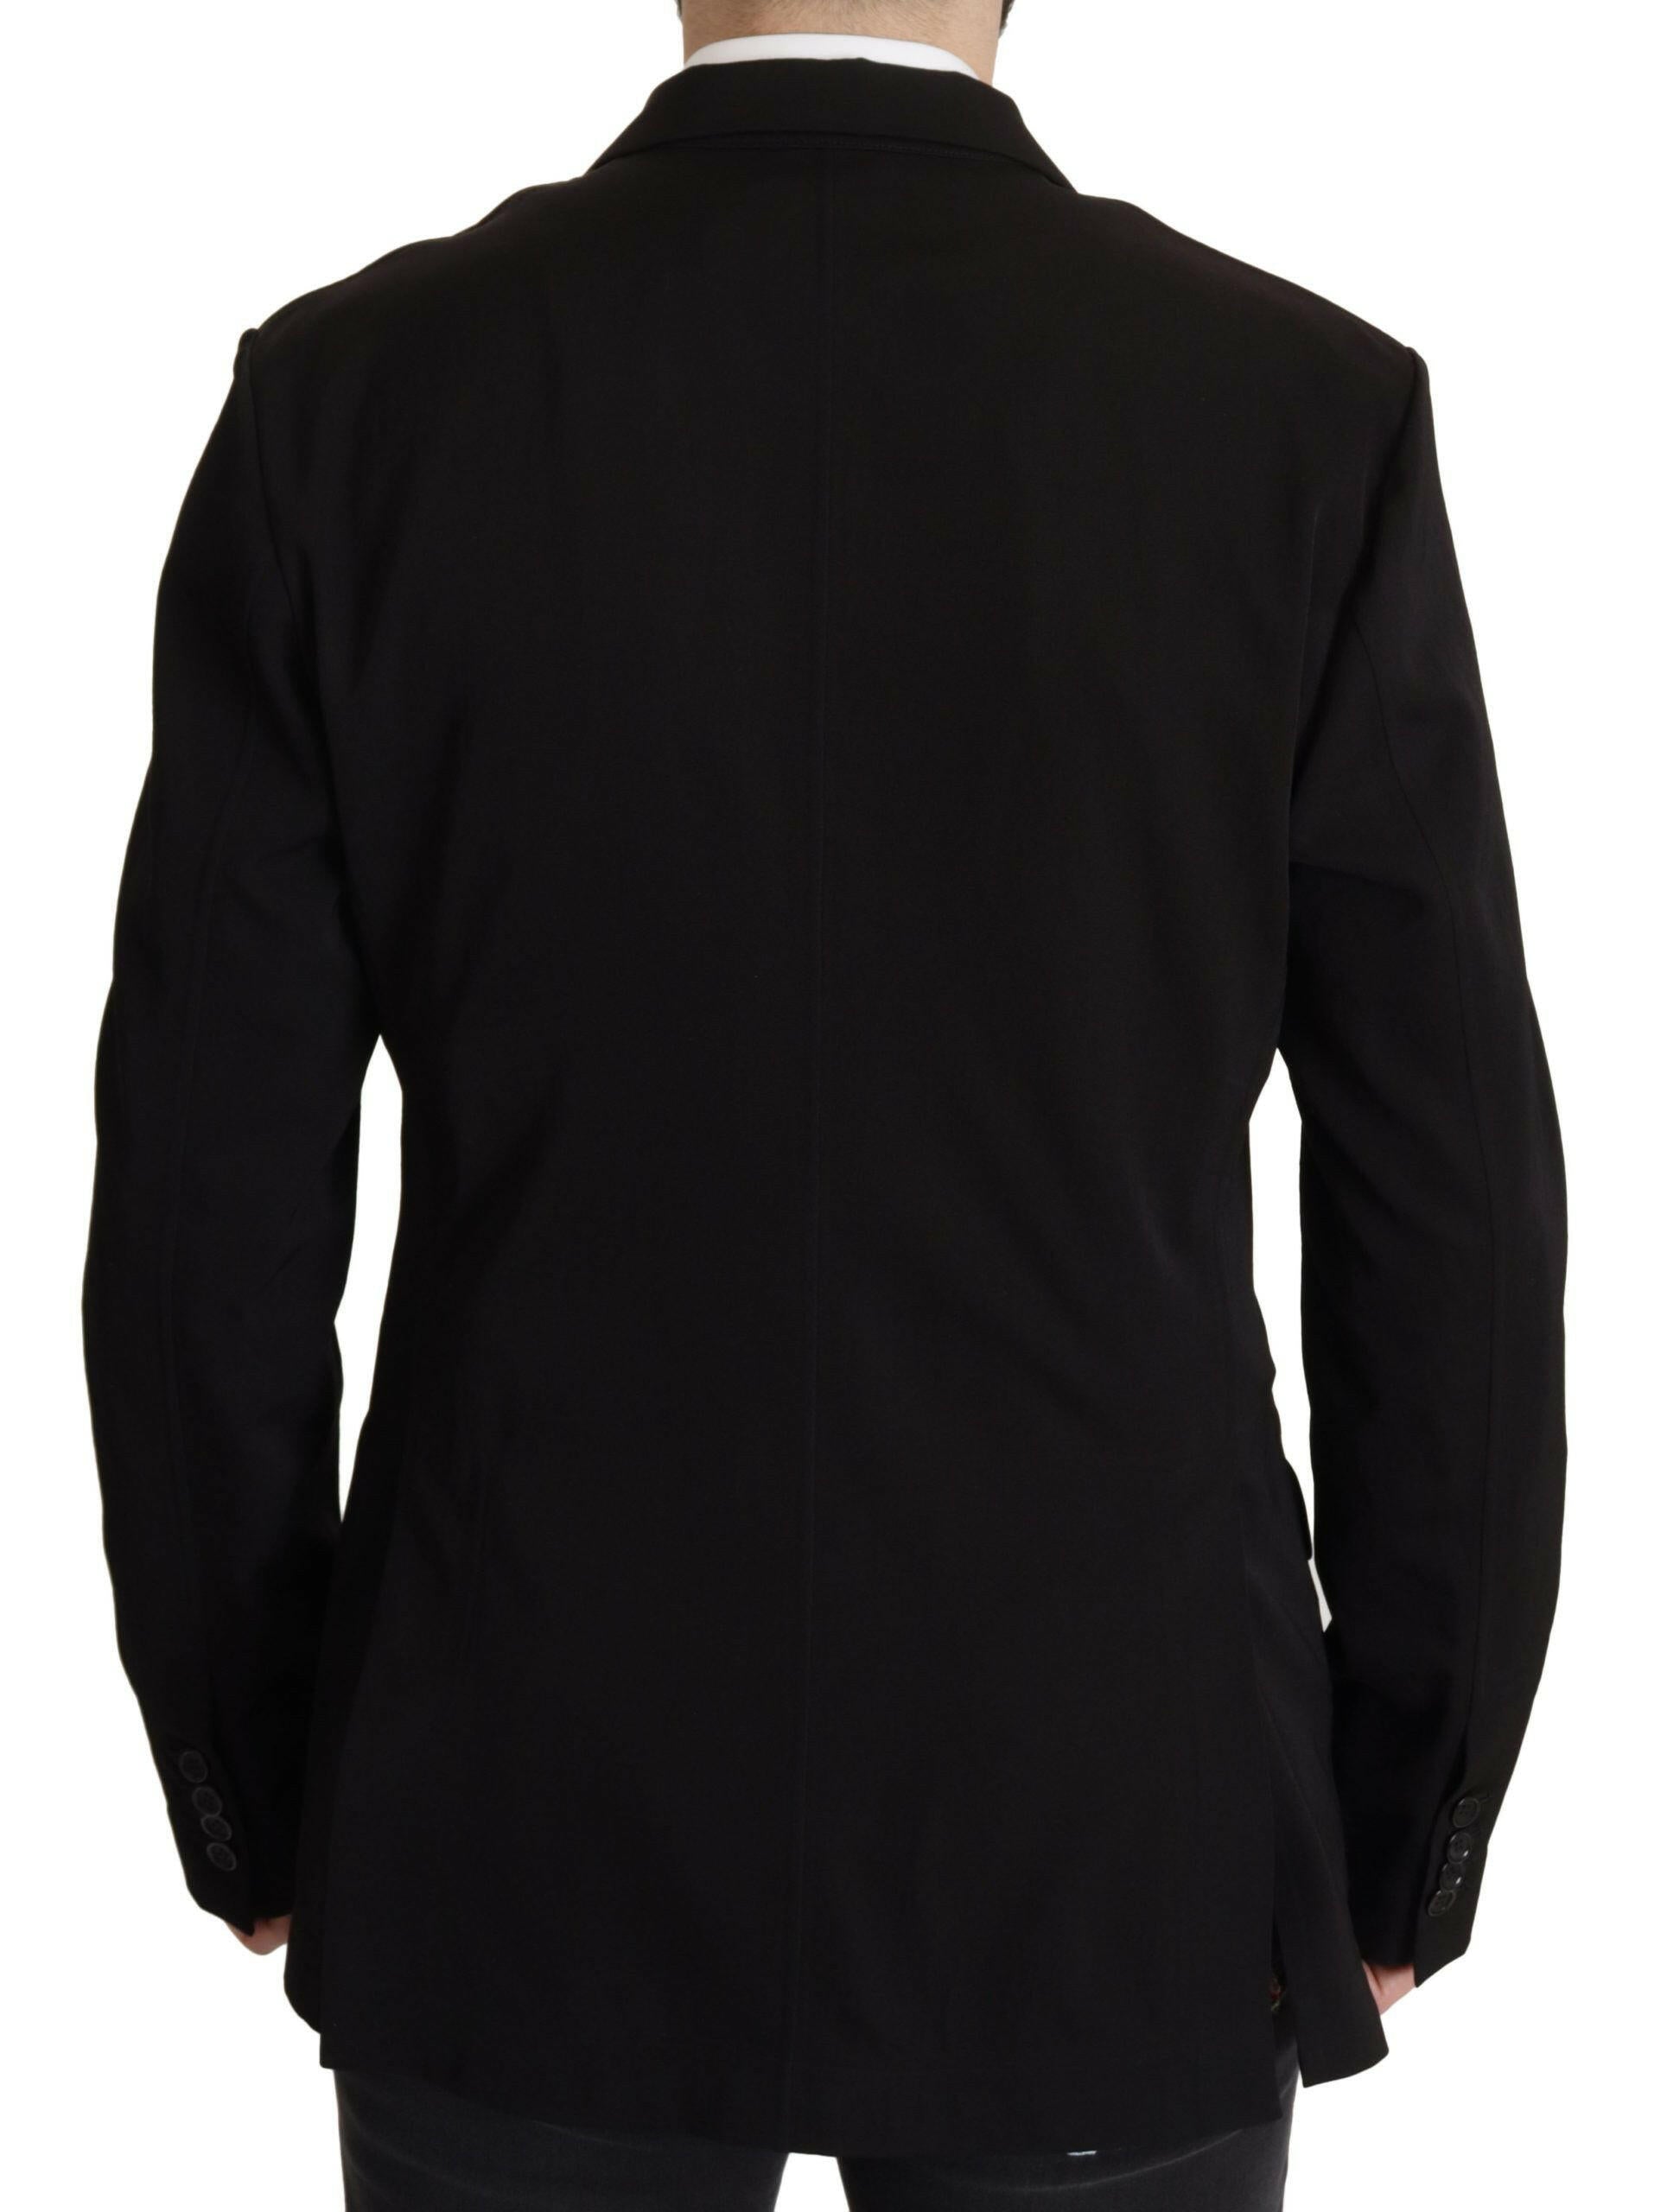 Dolce & Gabbana Black Wool Single Breasted Coat Blazer - GENUINE AUTHENTIC BRAND LLC  